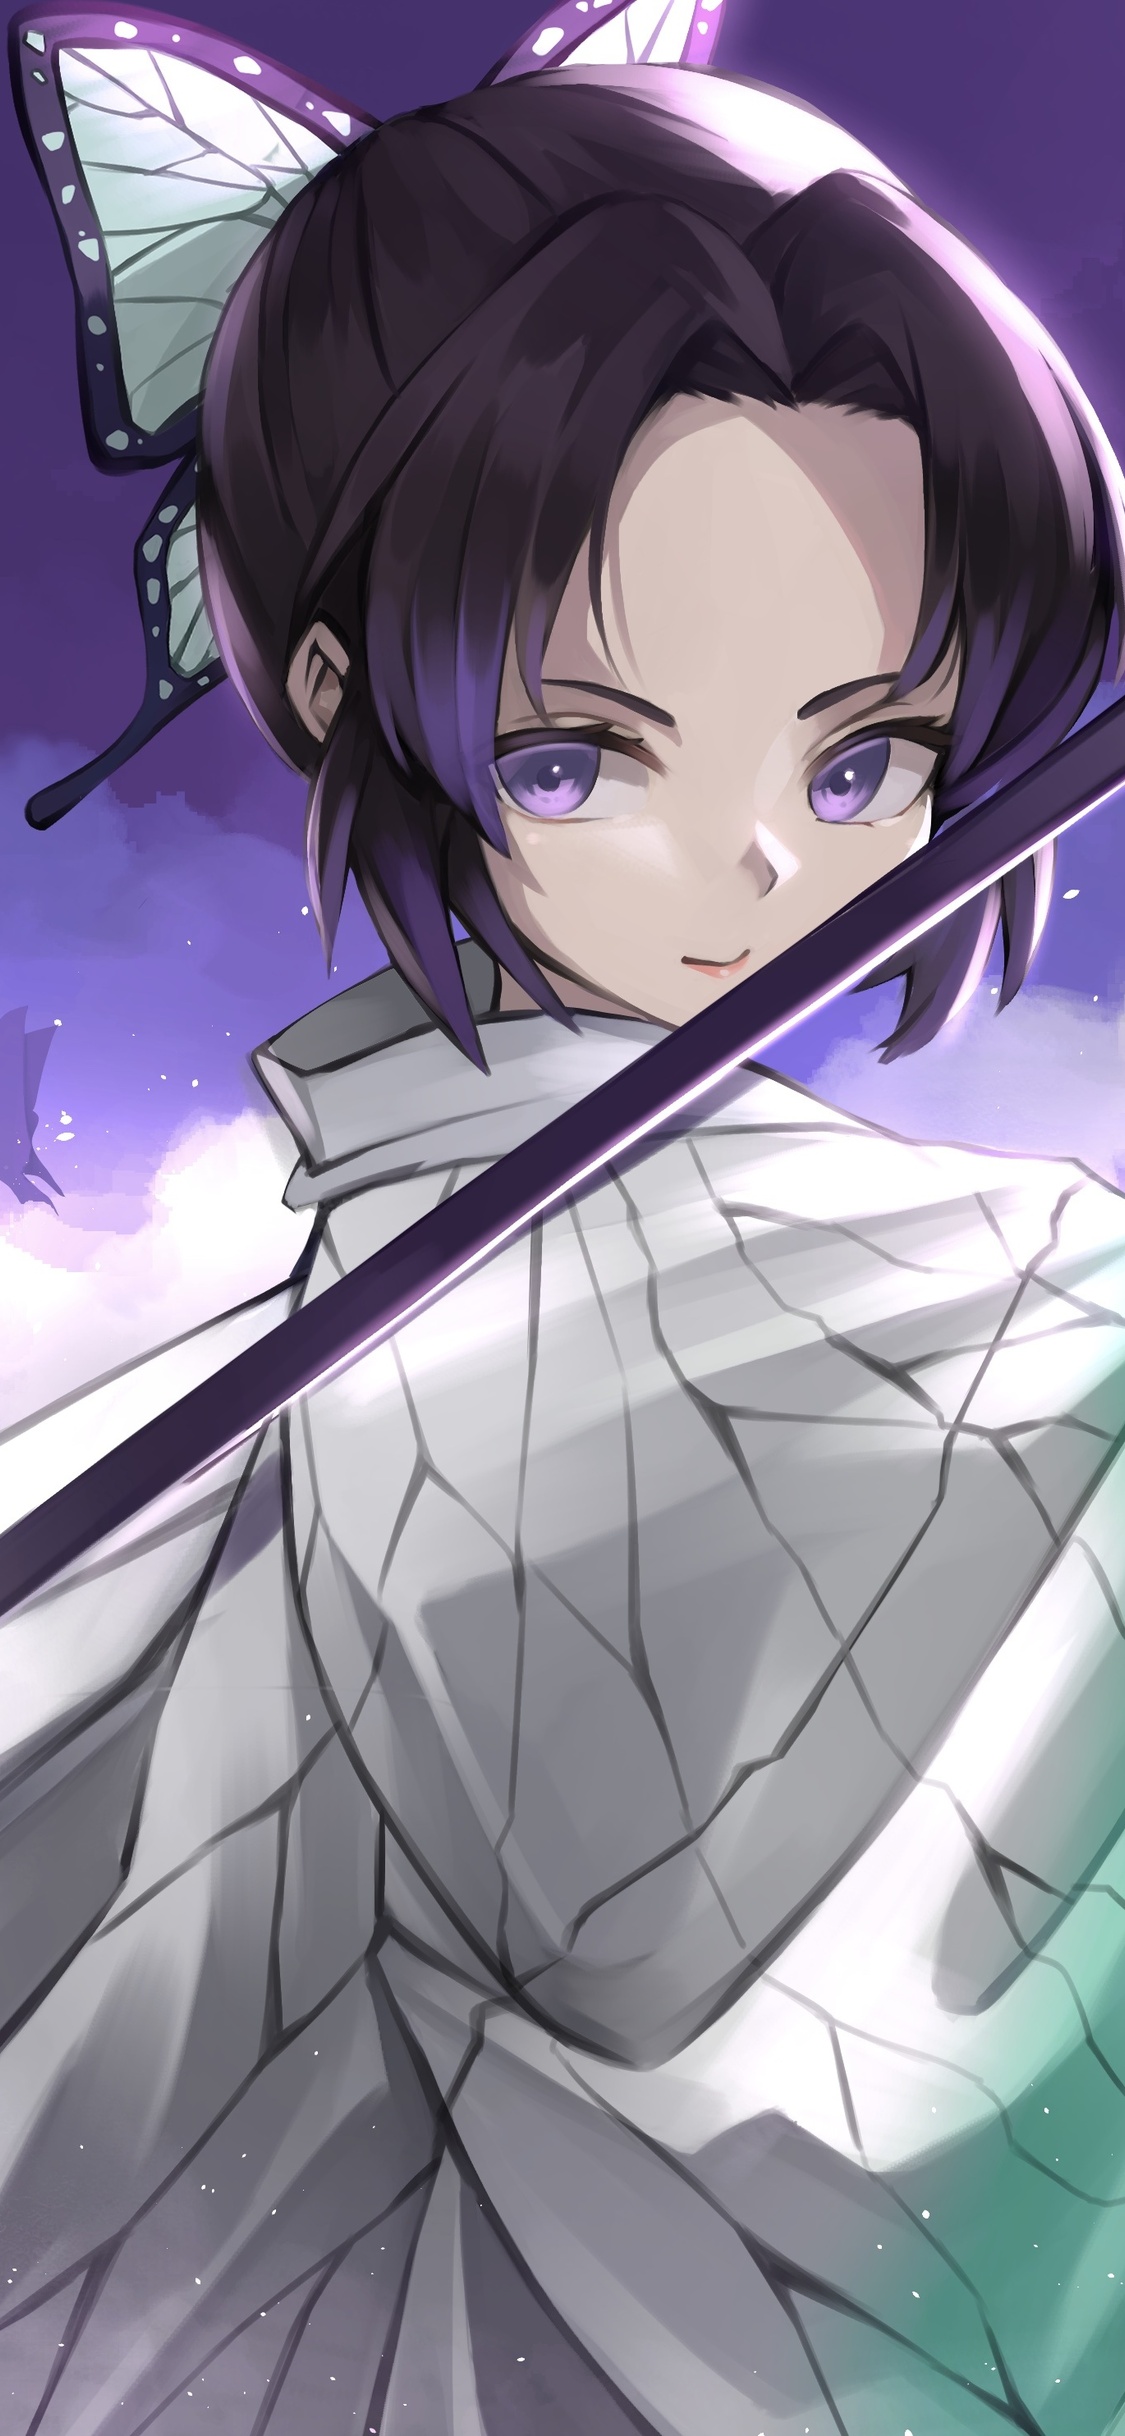 HD wallpaper: Anime, Rurouni Kenshin, hairstyle, one person, headshot,  portrait | Wallpaper Flare